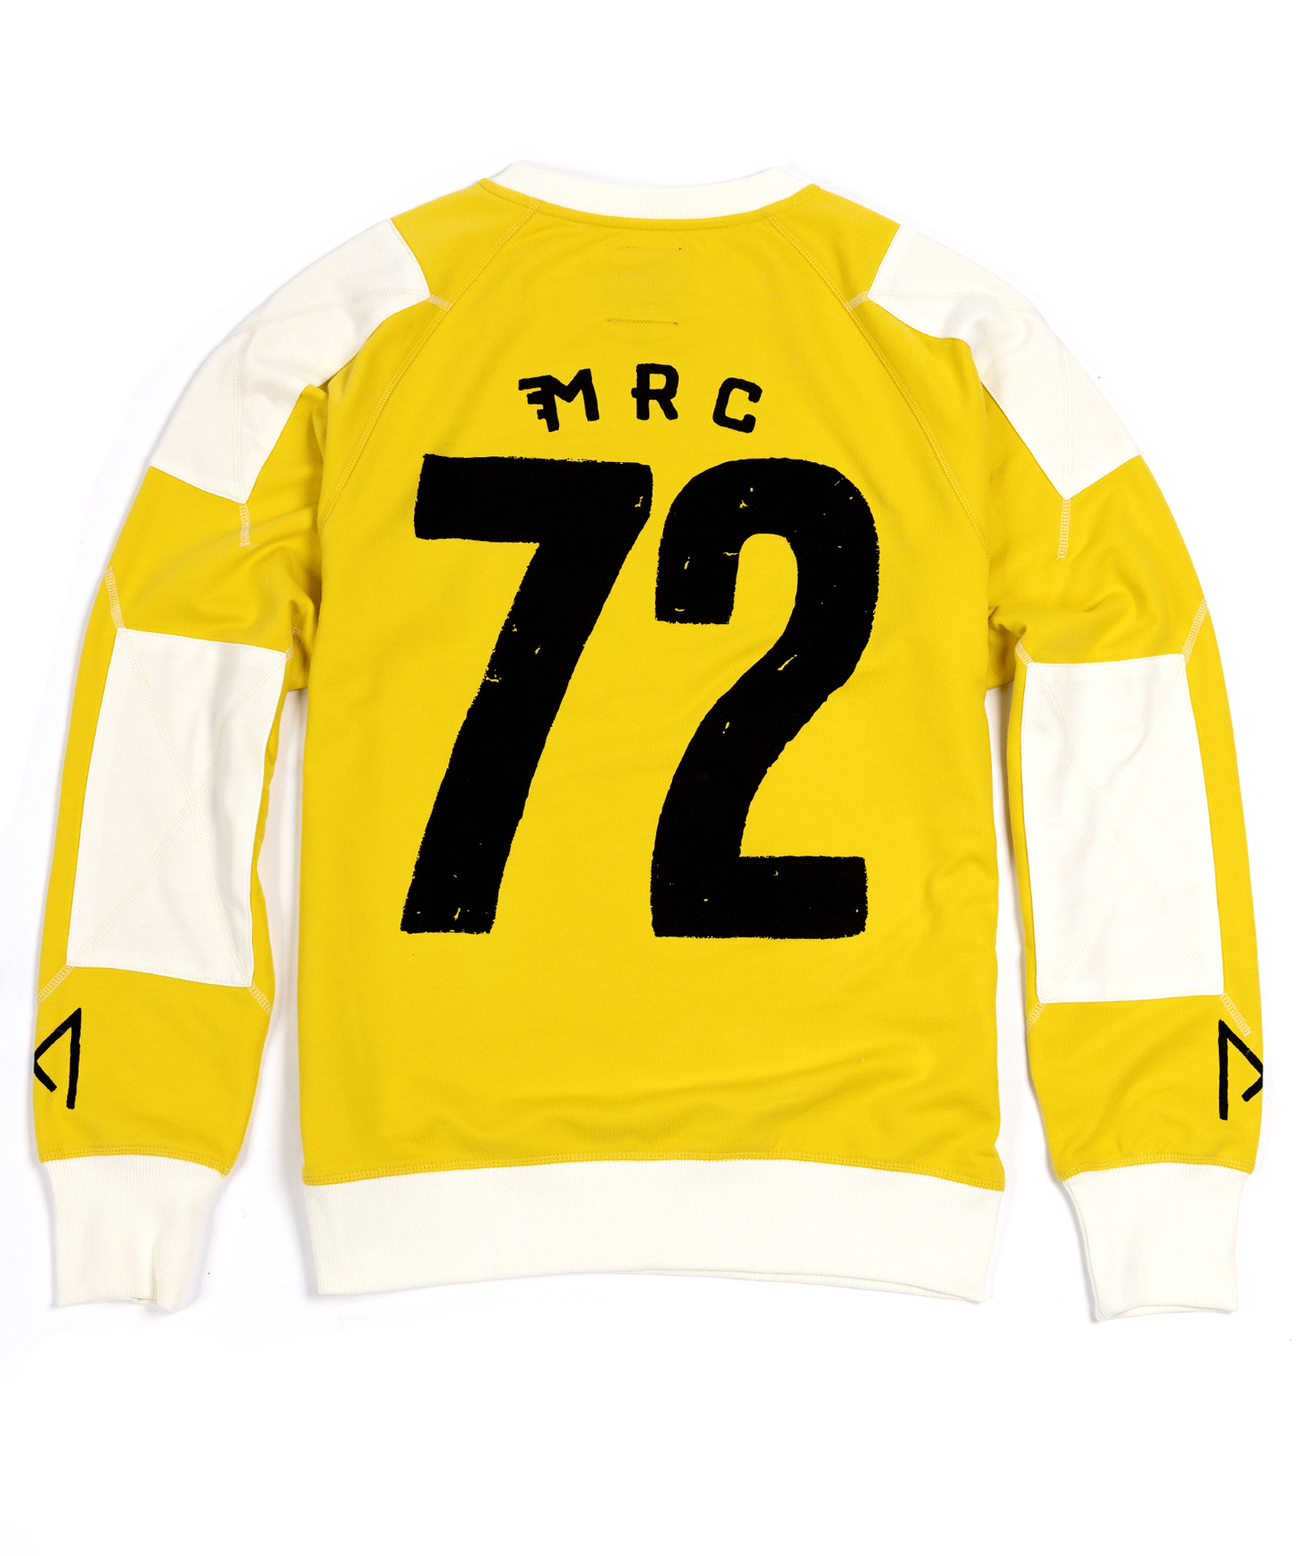 mens-yellow-Legion-sweatshirt-9.png